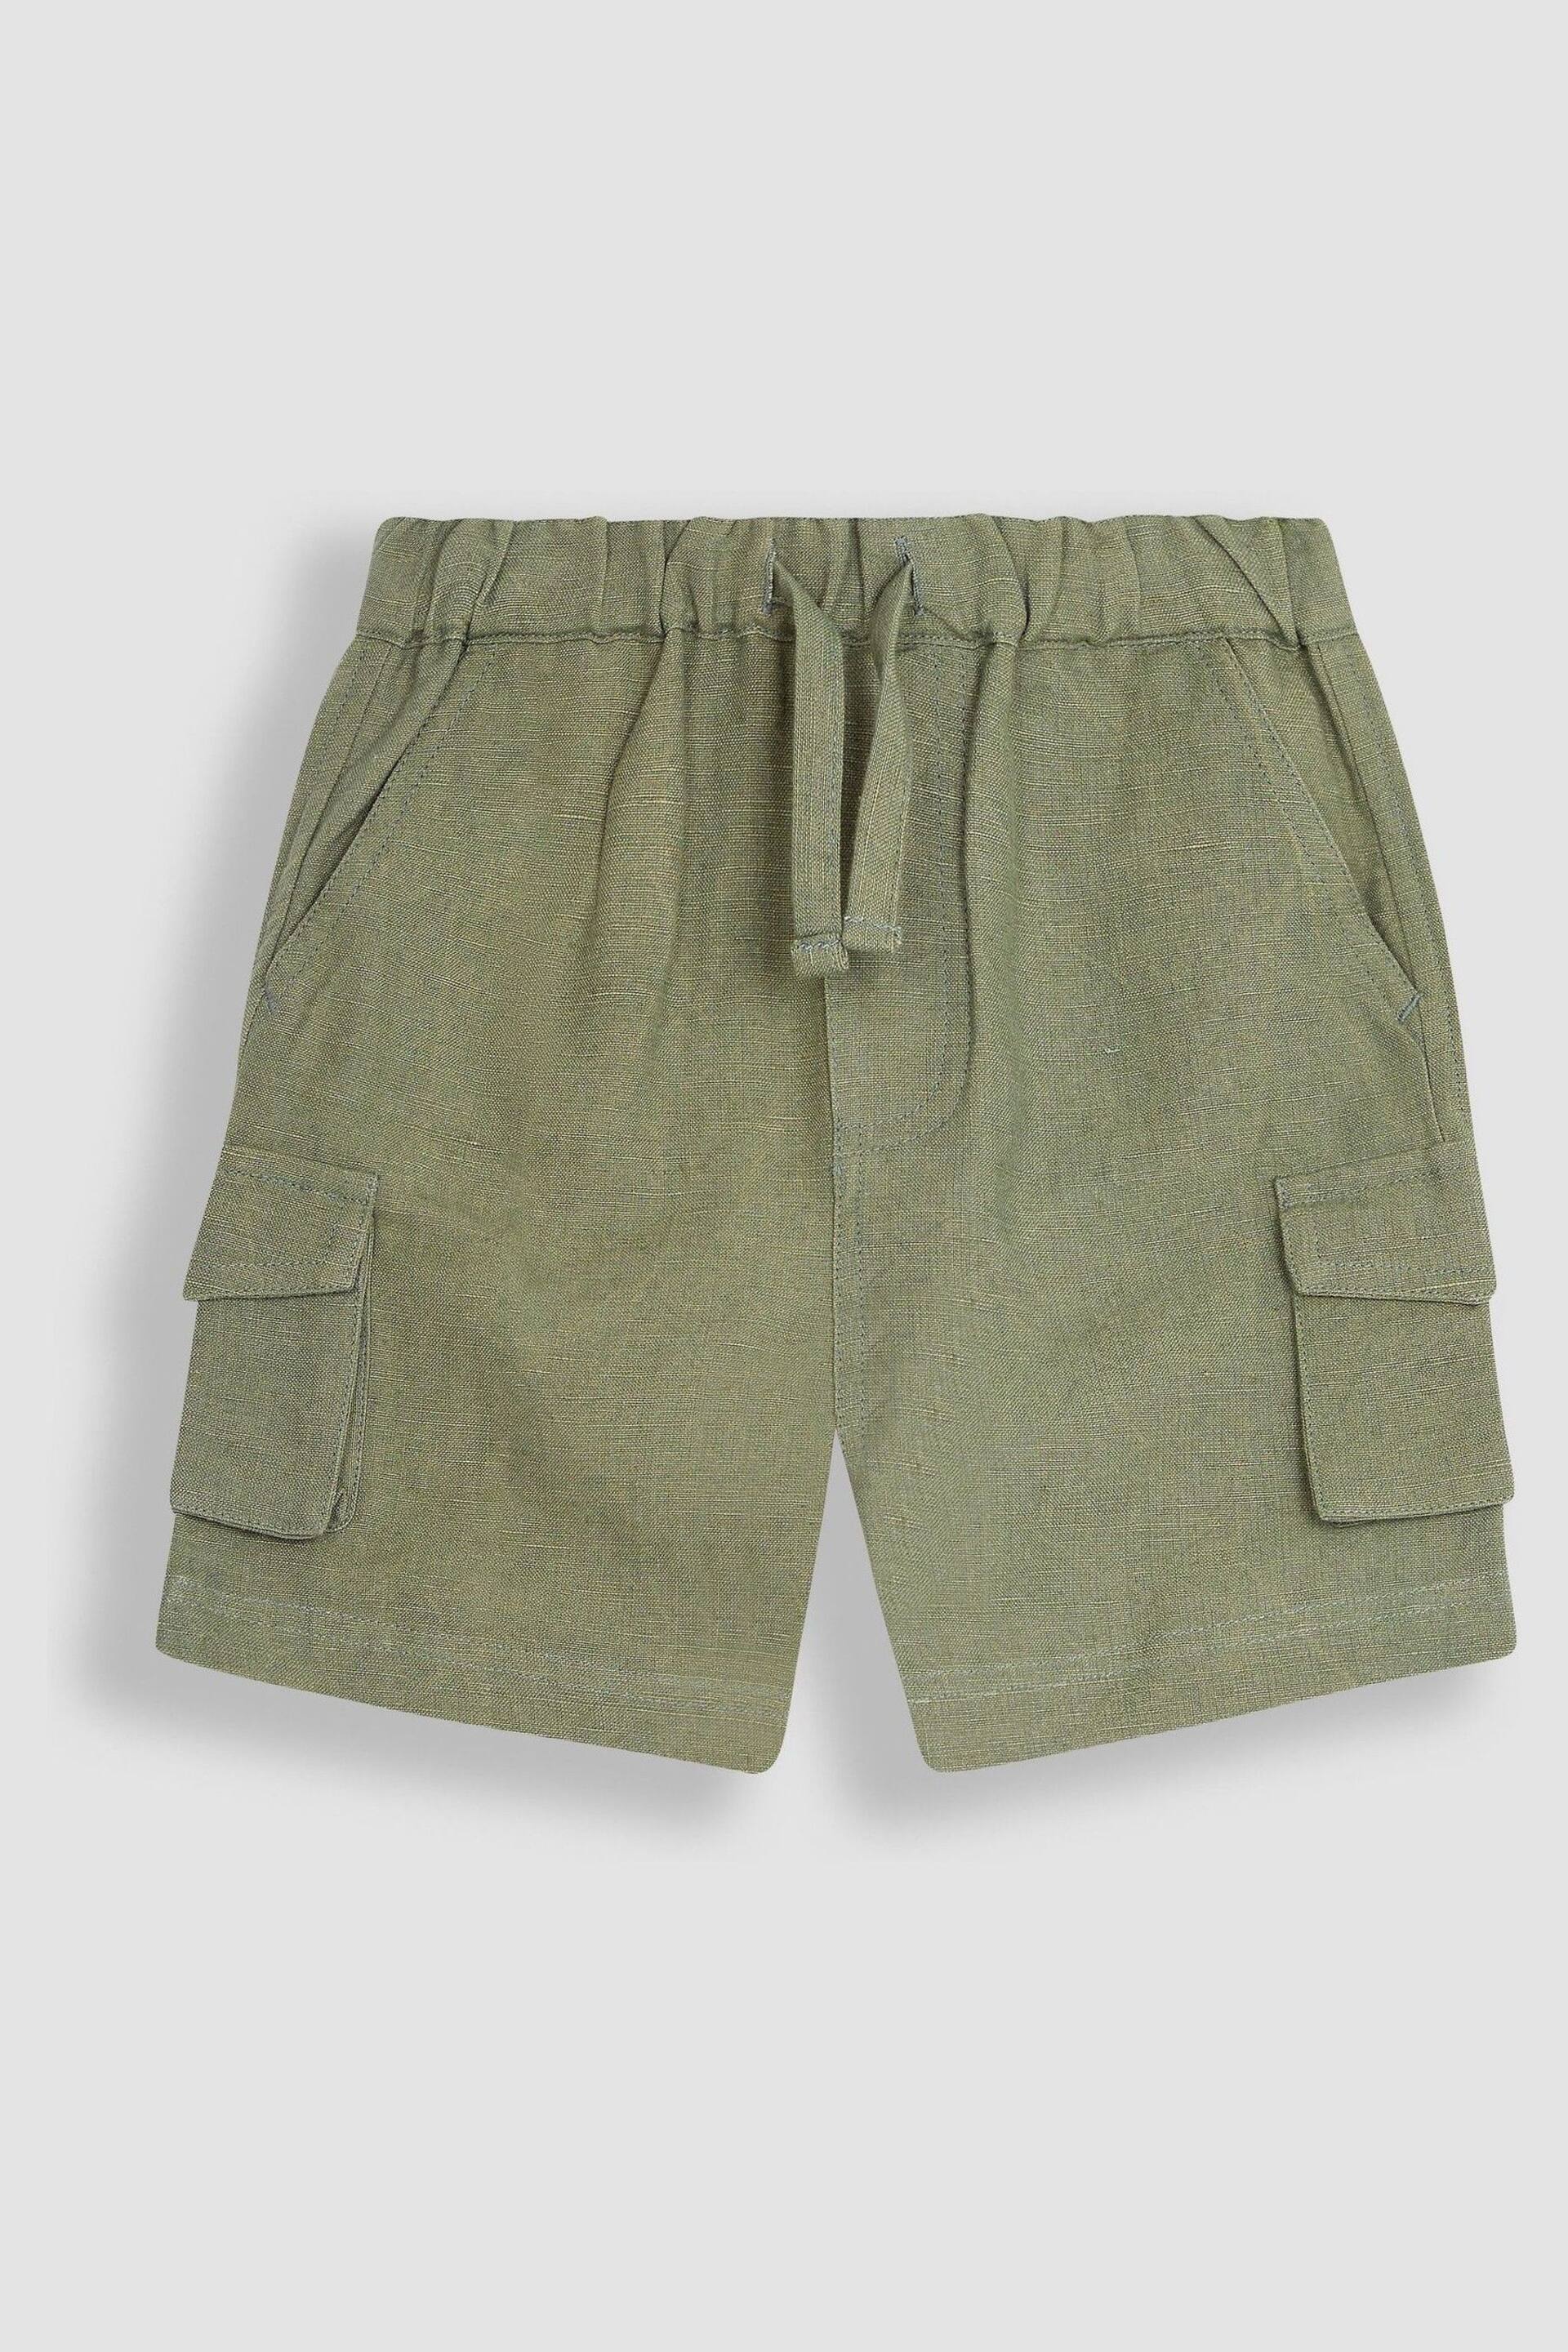 JoJo Maman Bébé Khaki Green Cotton Linen Summer Shorts - Image 1 of 3